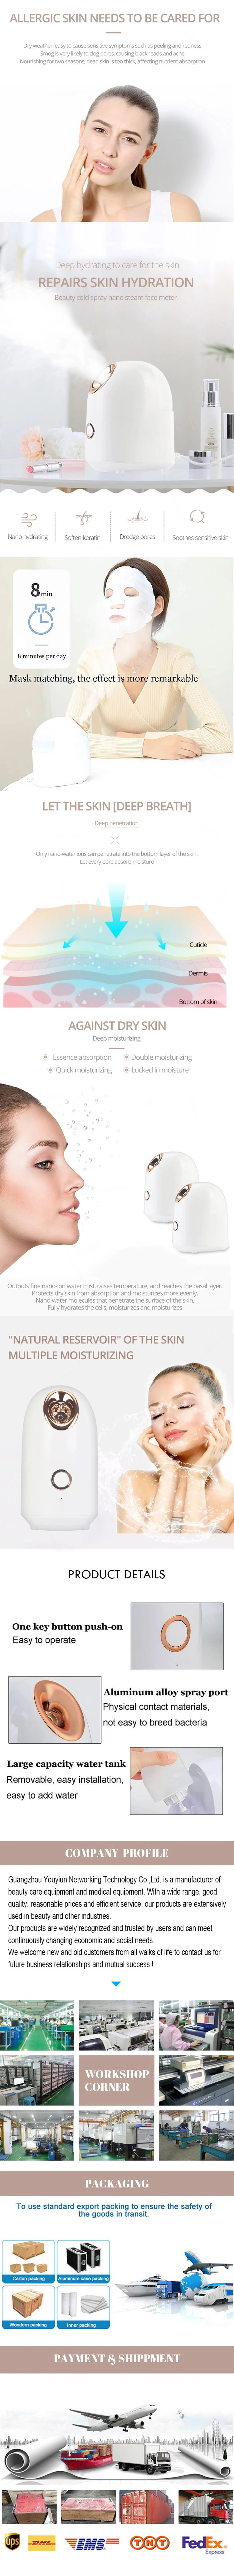 Beauty Personal Care Face Steamer Sprayer Face Humidifier Facial Steamer